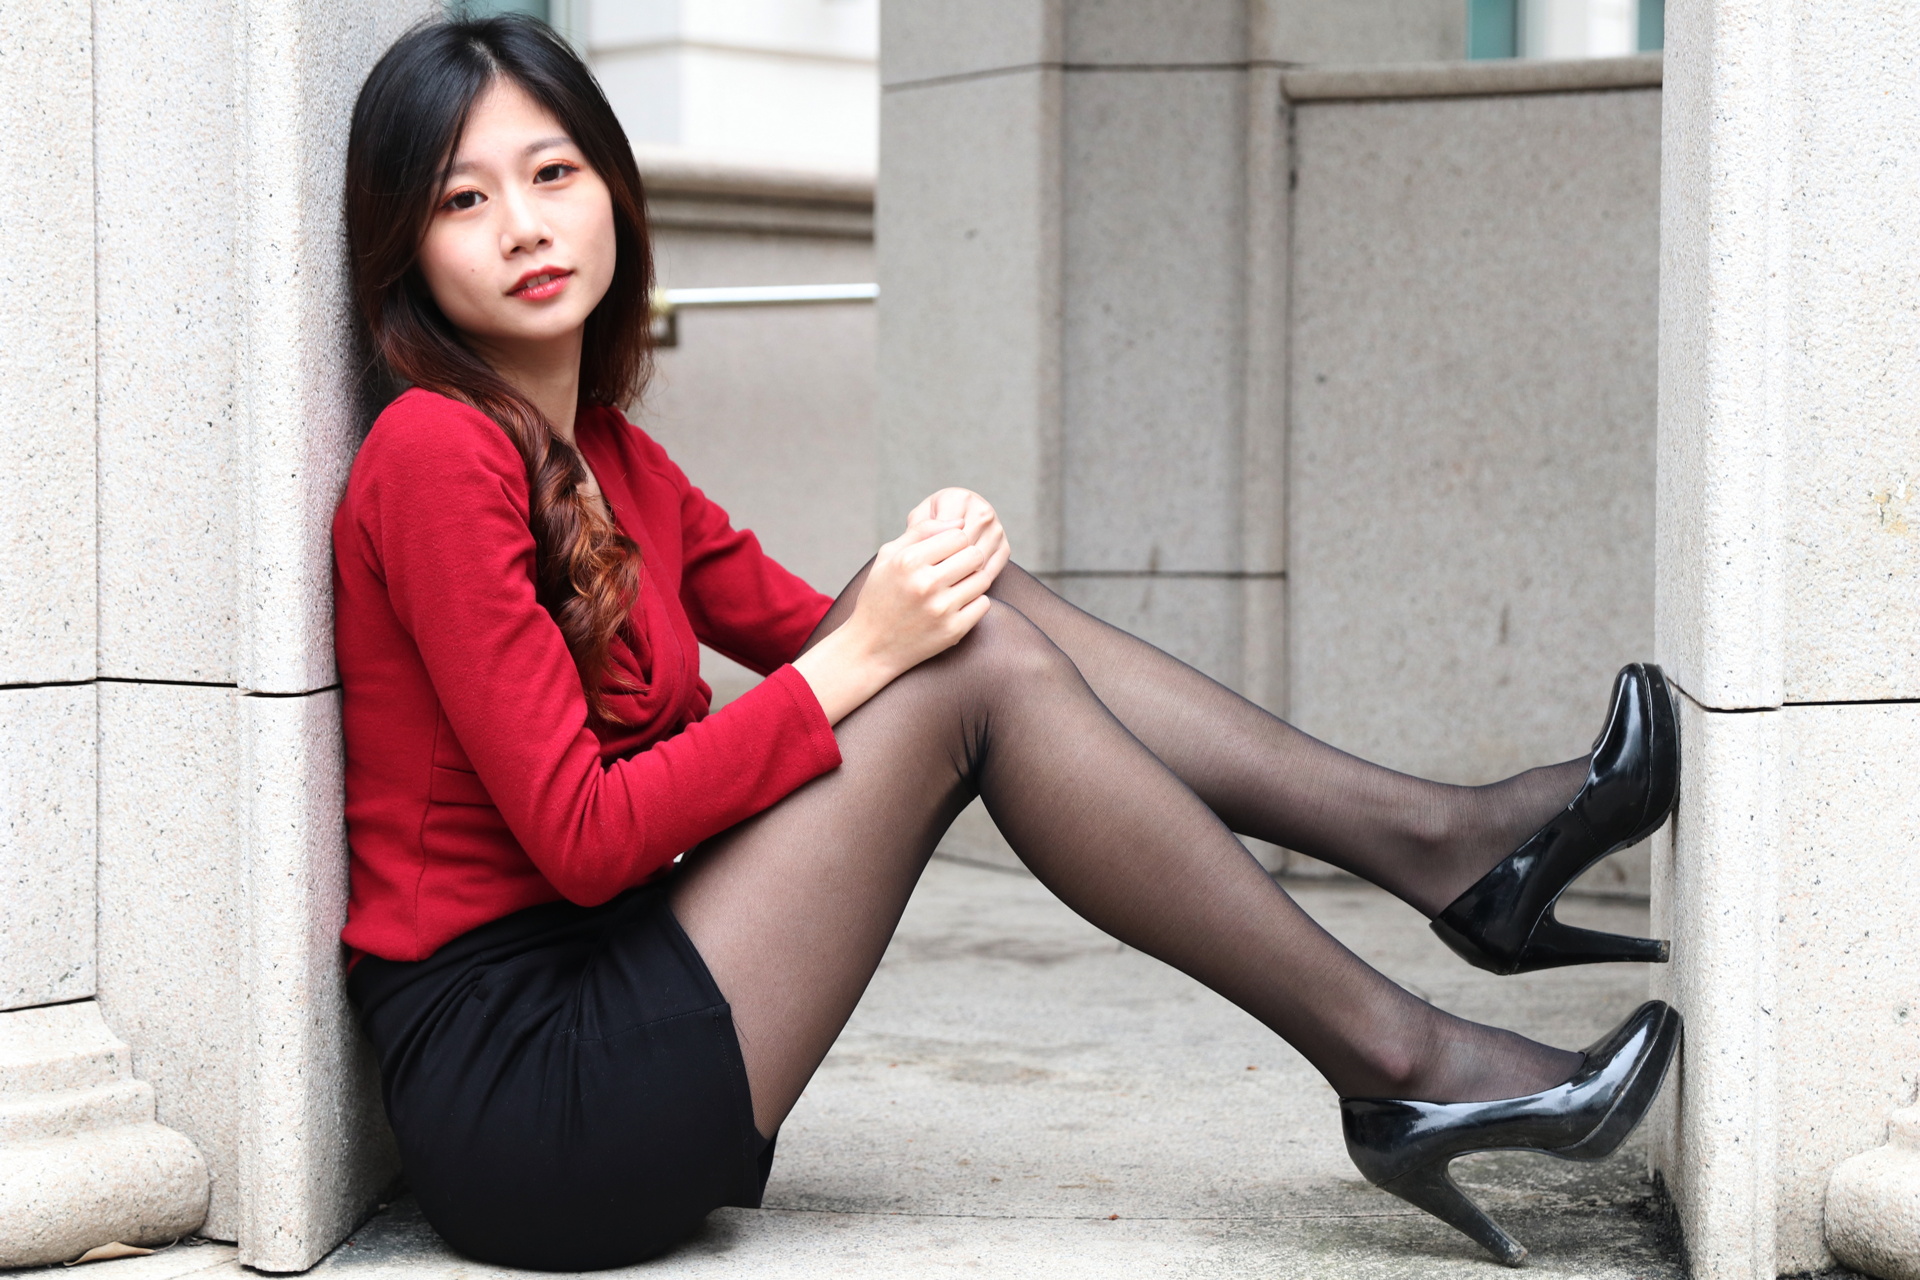 Asian Model Women Long Hair Dark Hair Sitting Nylons Heels 1920x1280